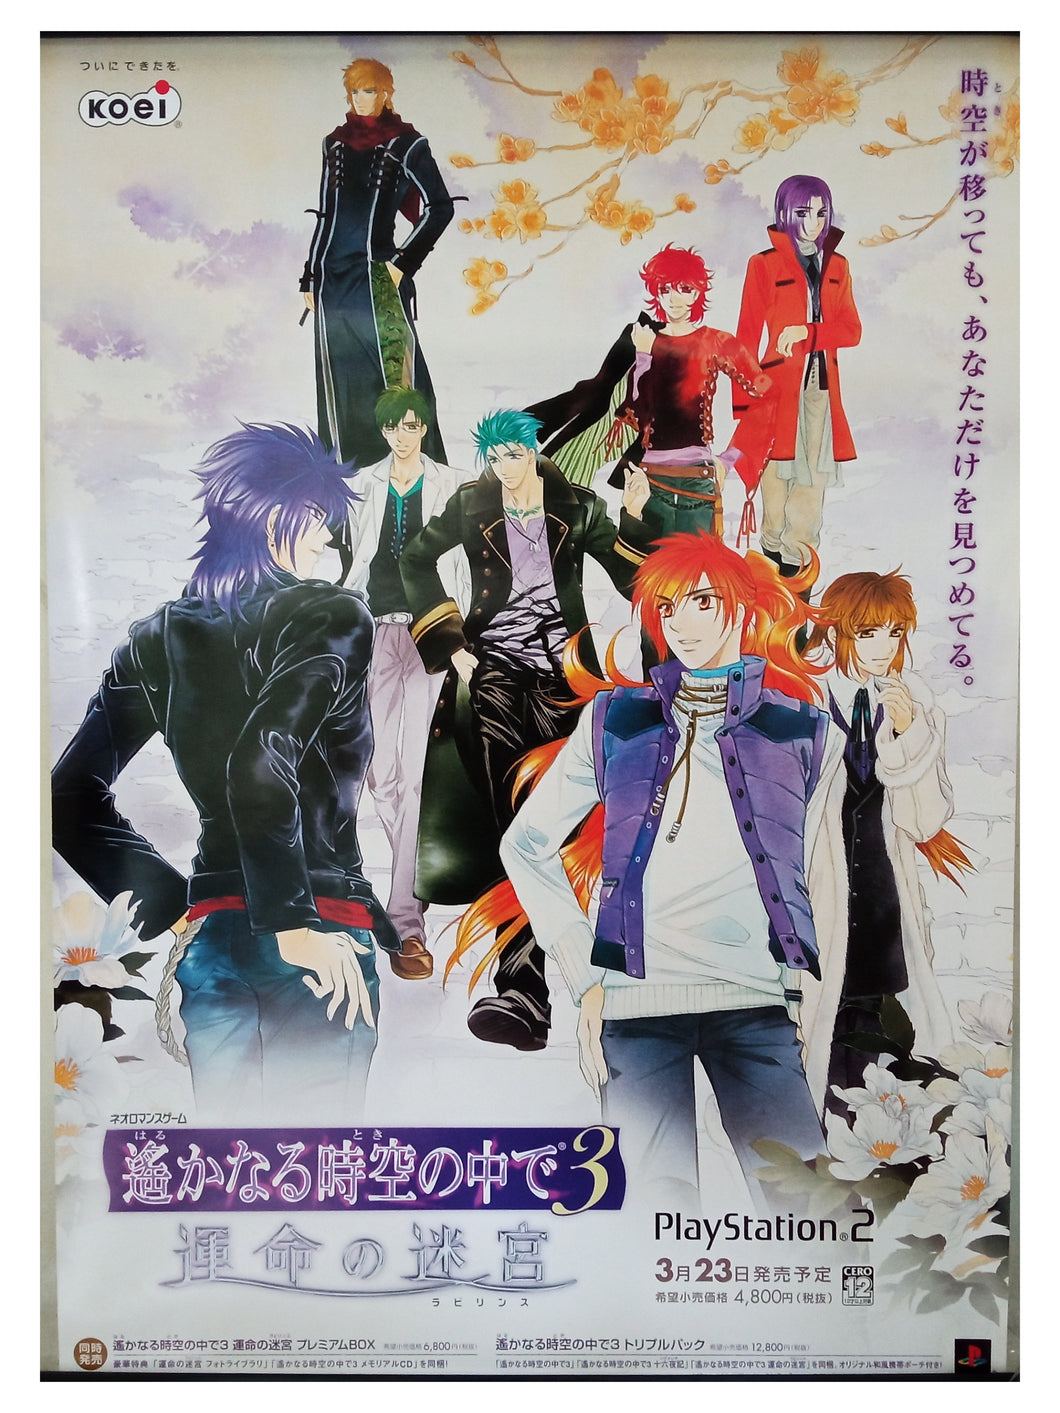 Harukanaru Toki no Naka de 3: Unmei no Labyrinth - Playstation 2 - Store Prommotional B2 Poster